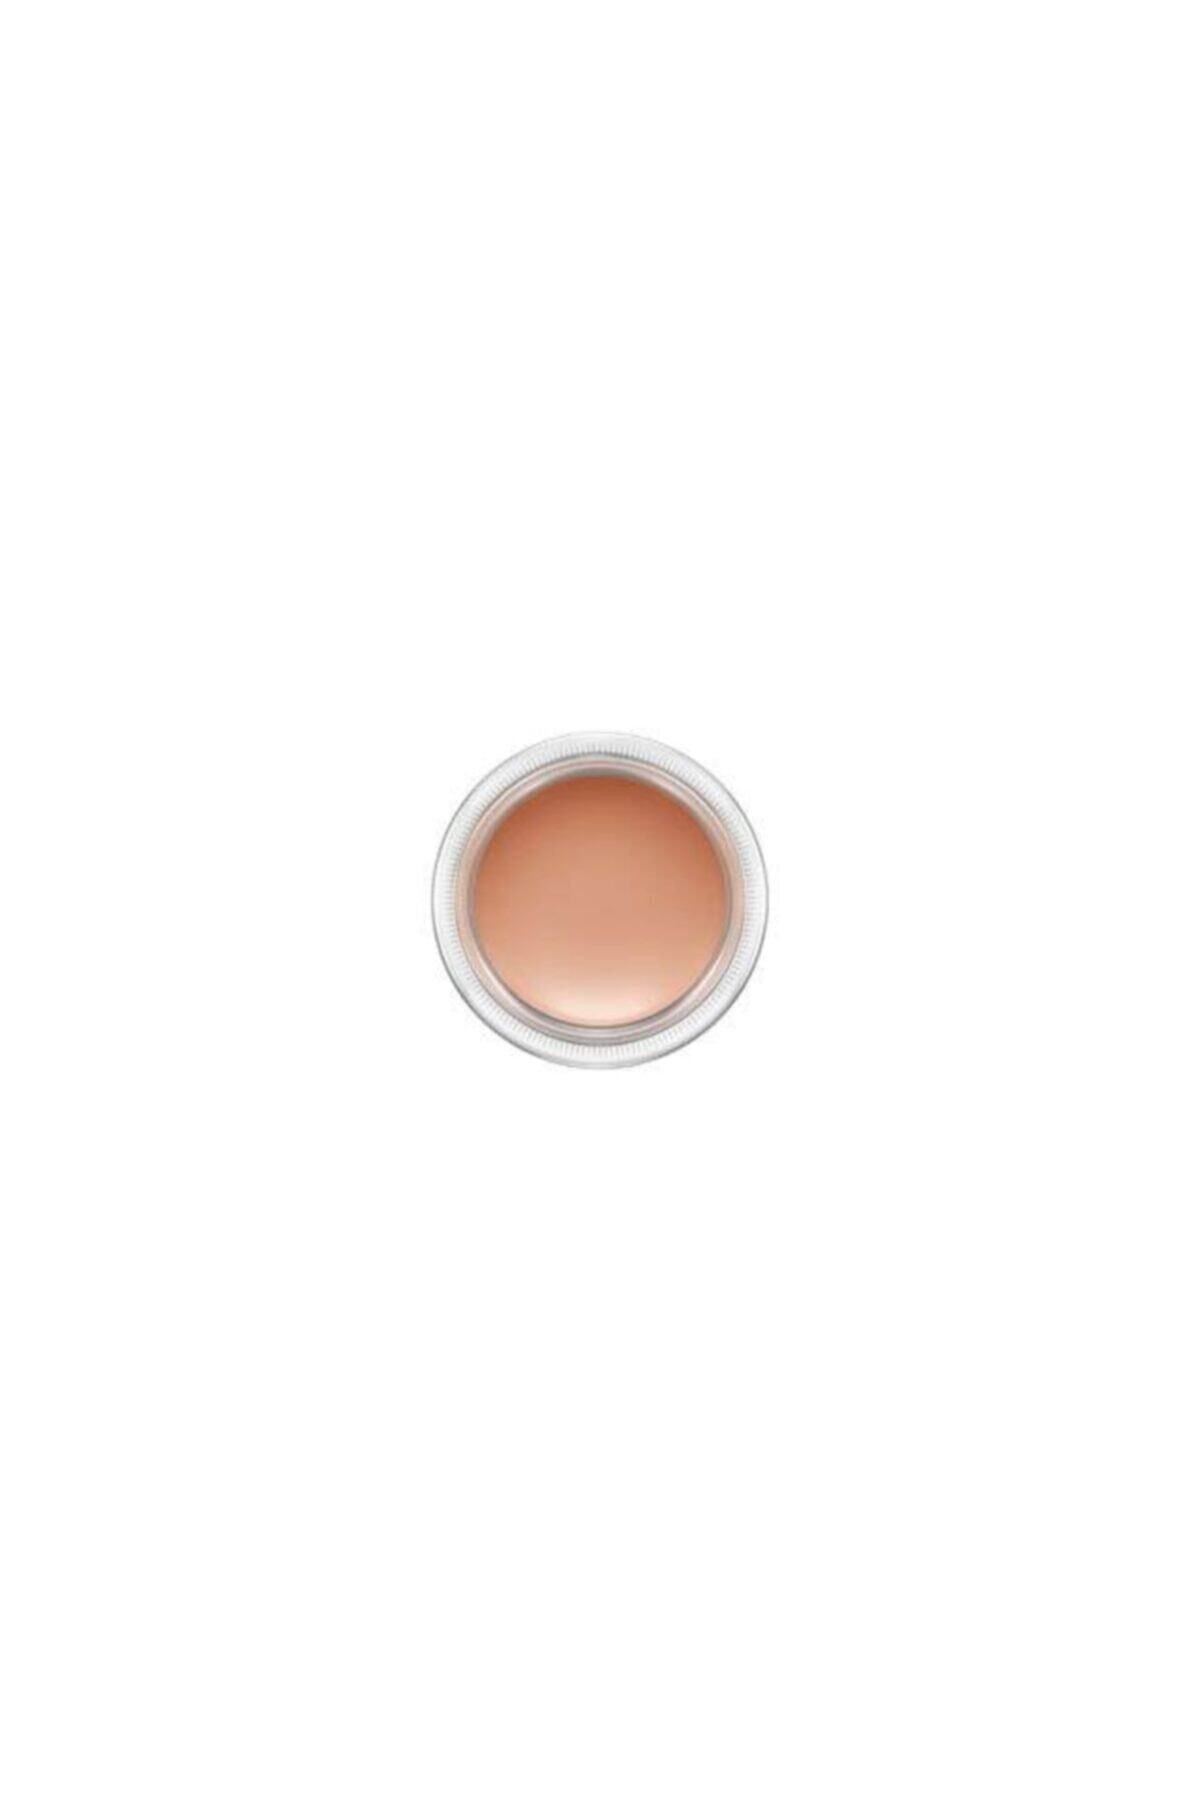 Mac Paint Pot Layin' Low Cream Eyeshadow & Eyeshadow Base - 5 gr DEMBA573